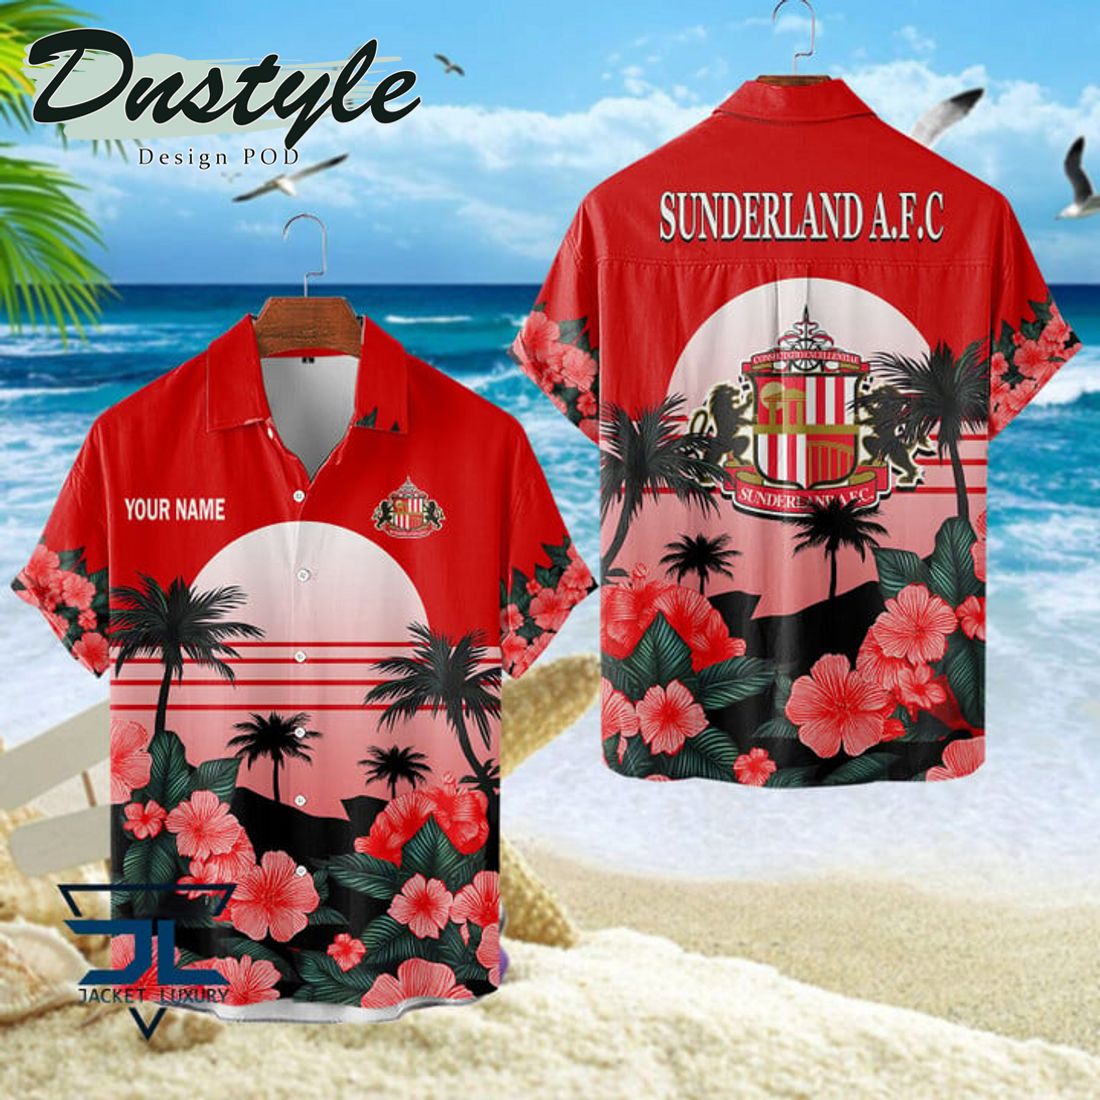 Stoke City FC 2024 Custom Name Hawaiian Shirt